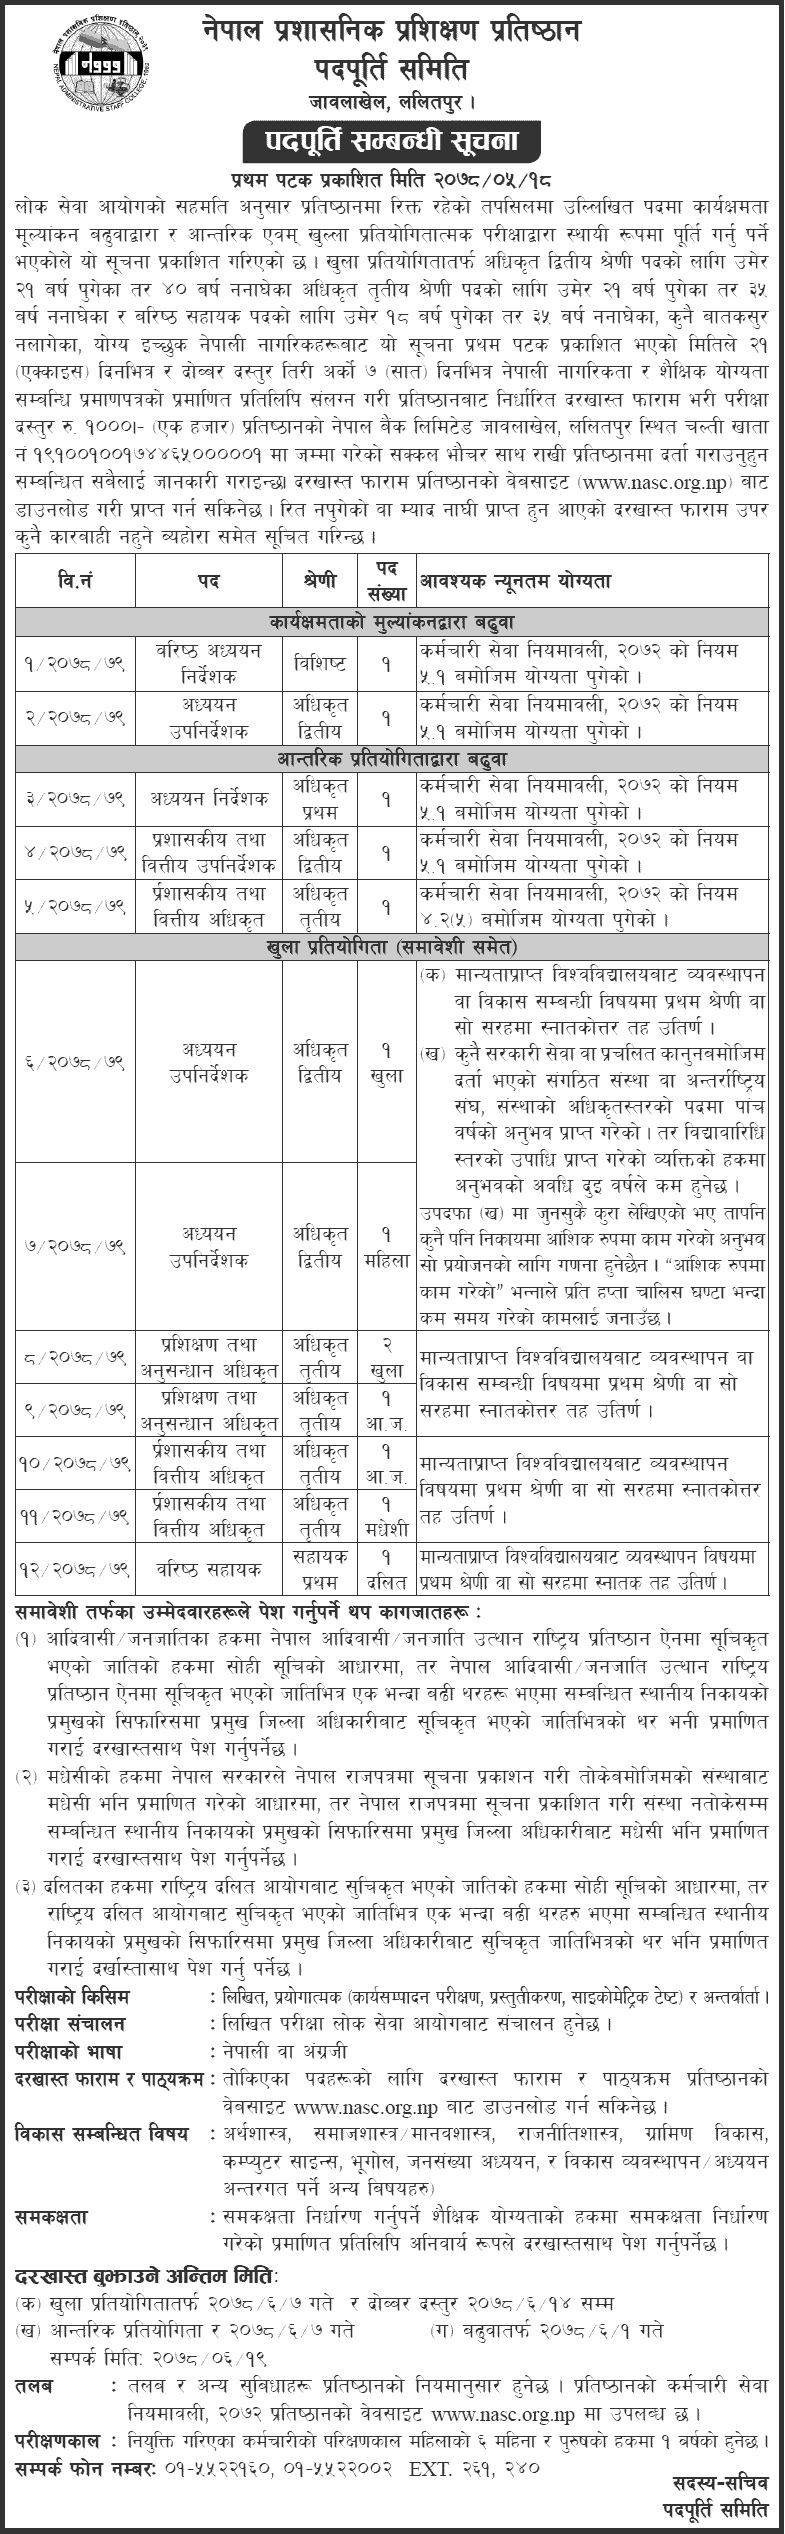 Nepal Administrative Staff College (NASC) Vacancy 2078